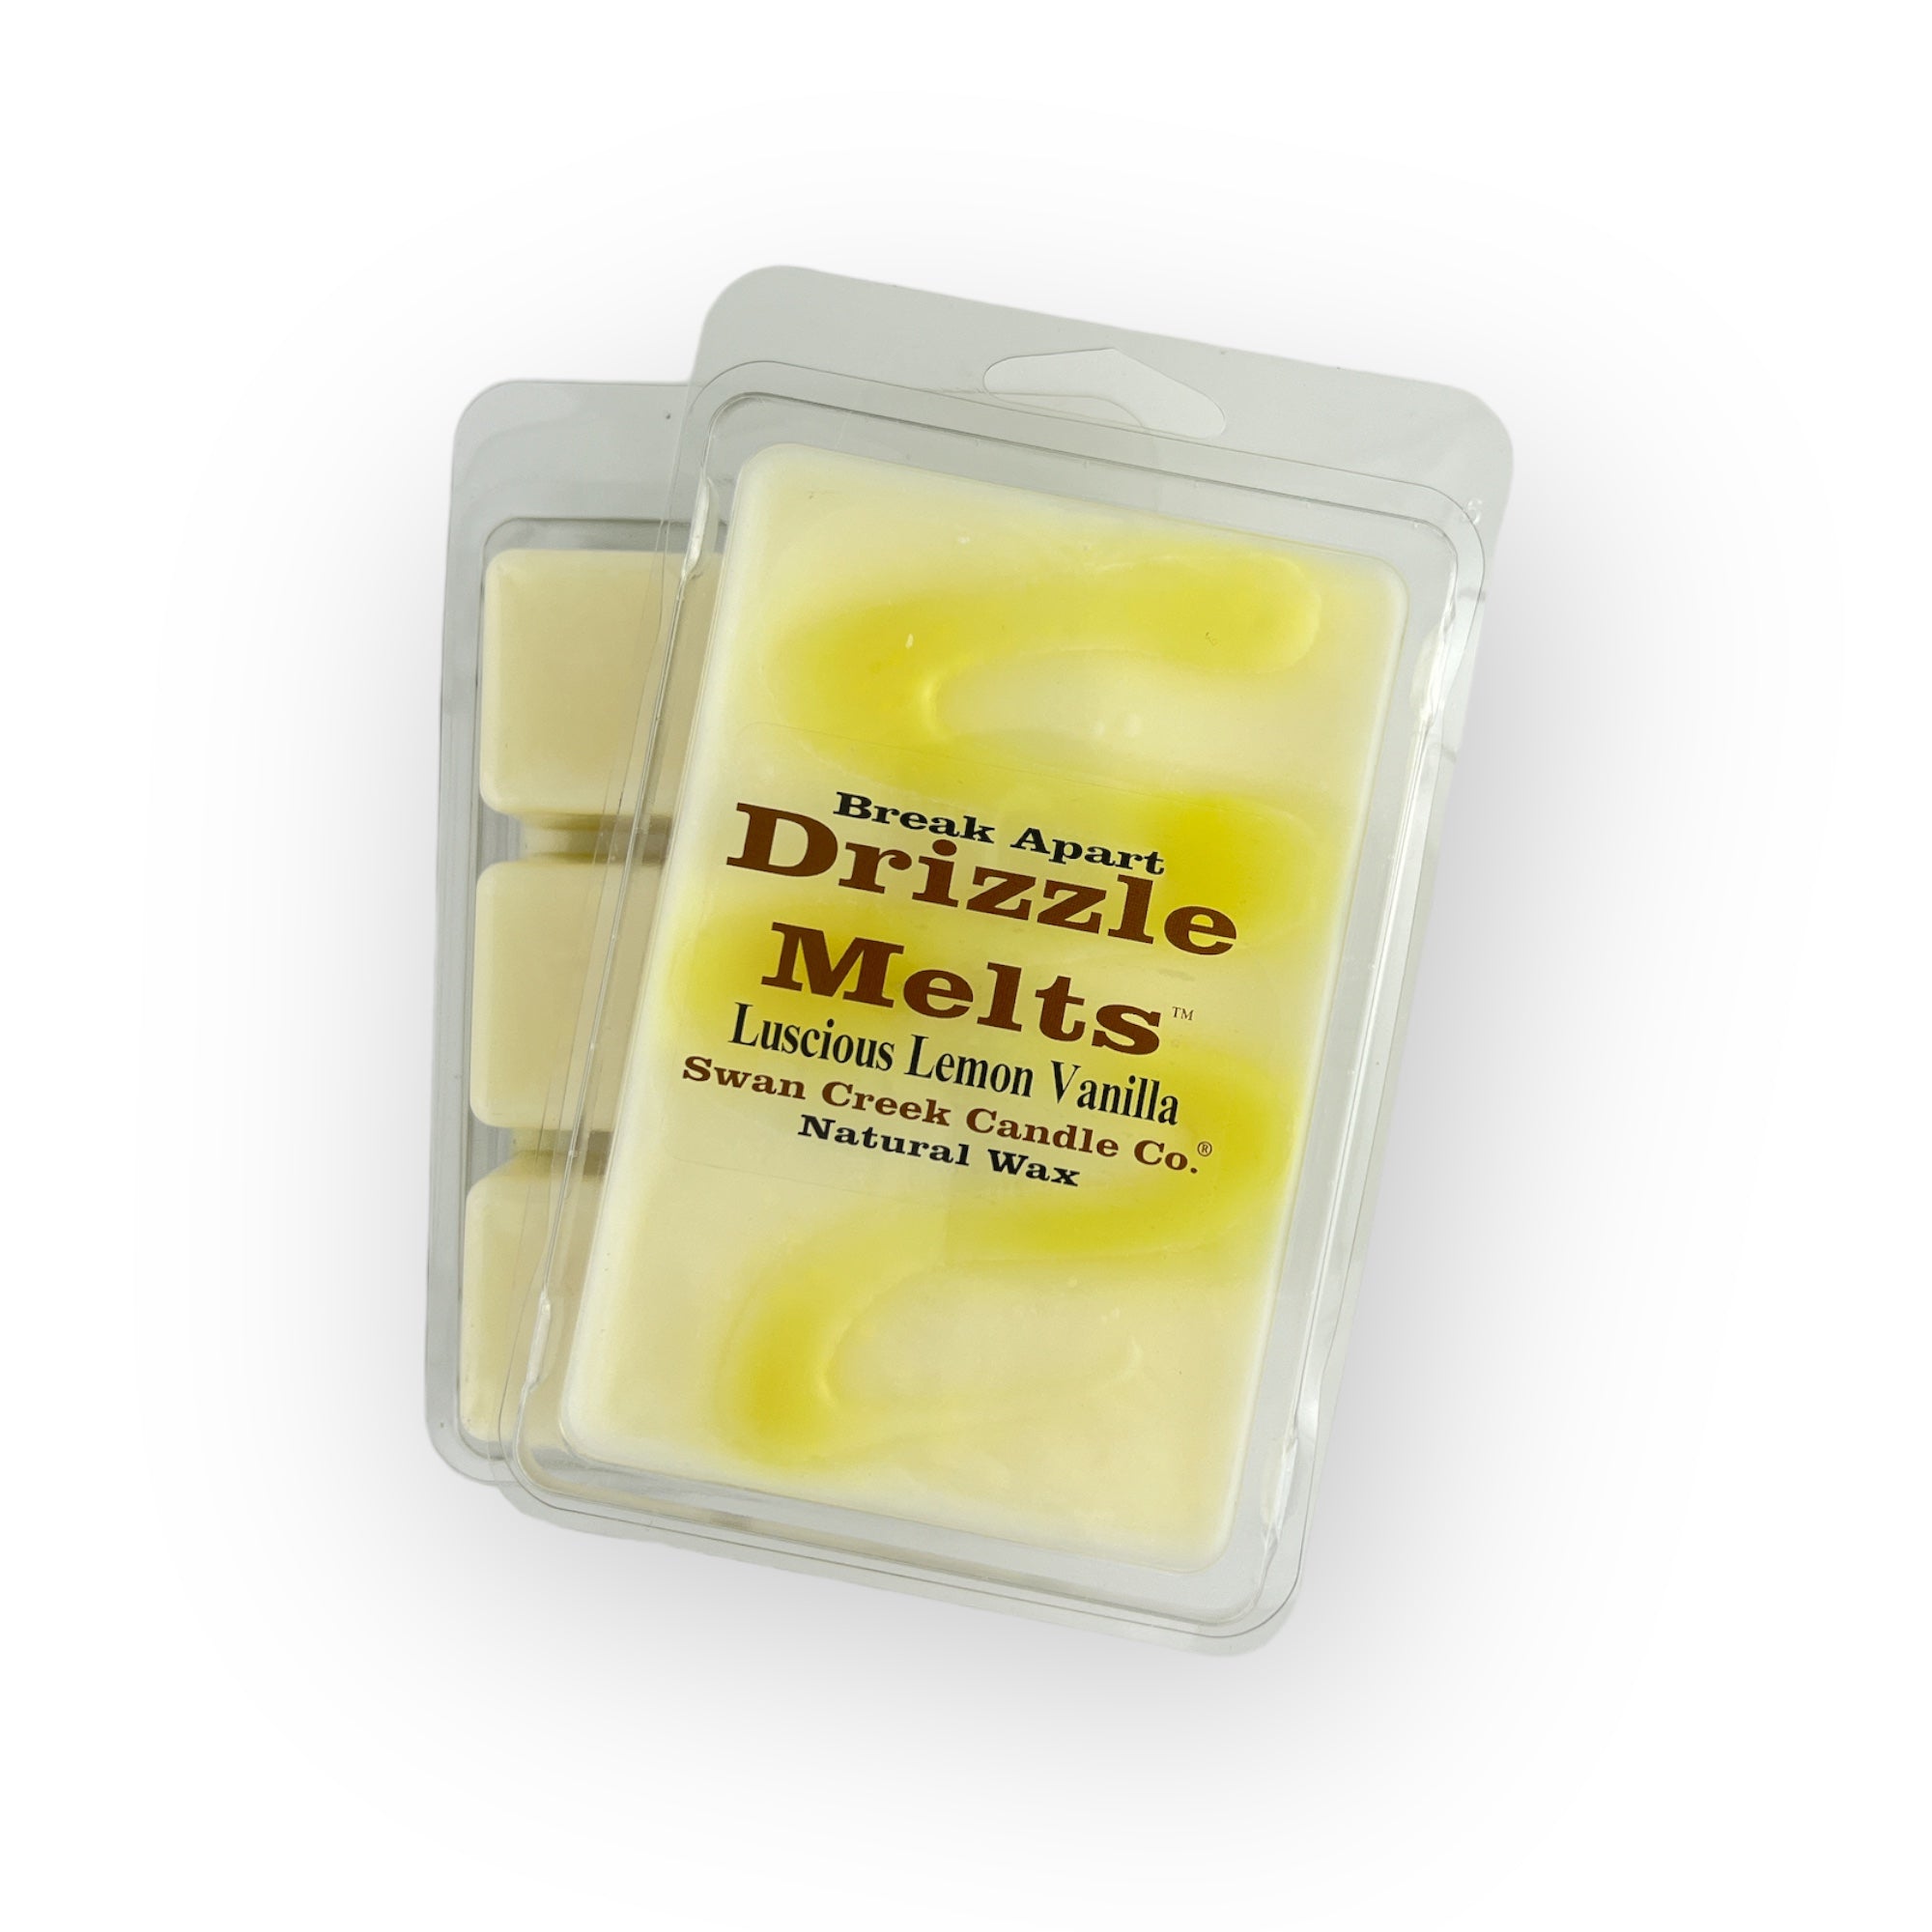 Swan Creek Drizzle Melts - Luscious Lemon Vanilla